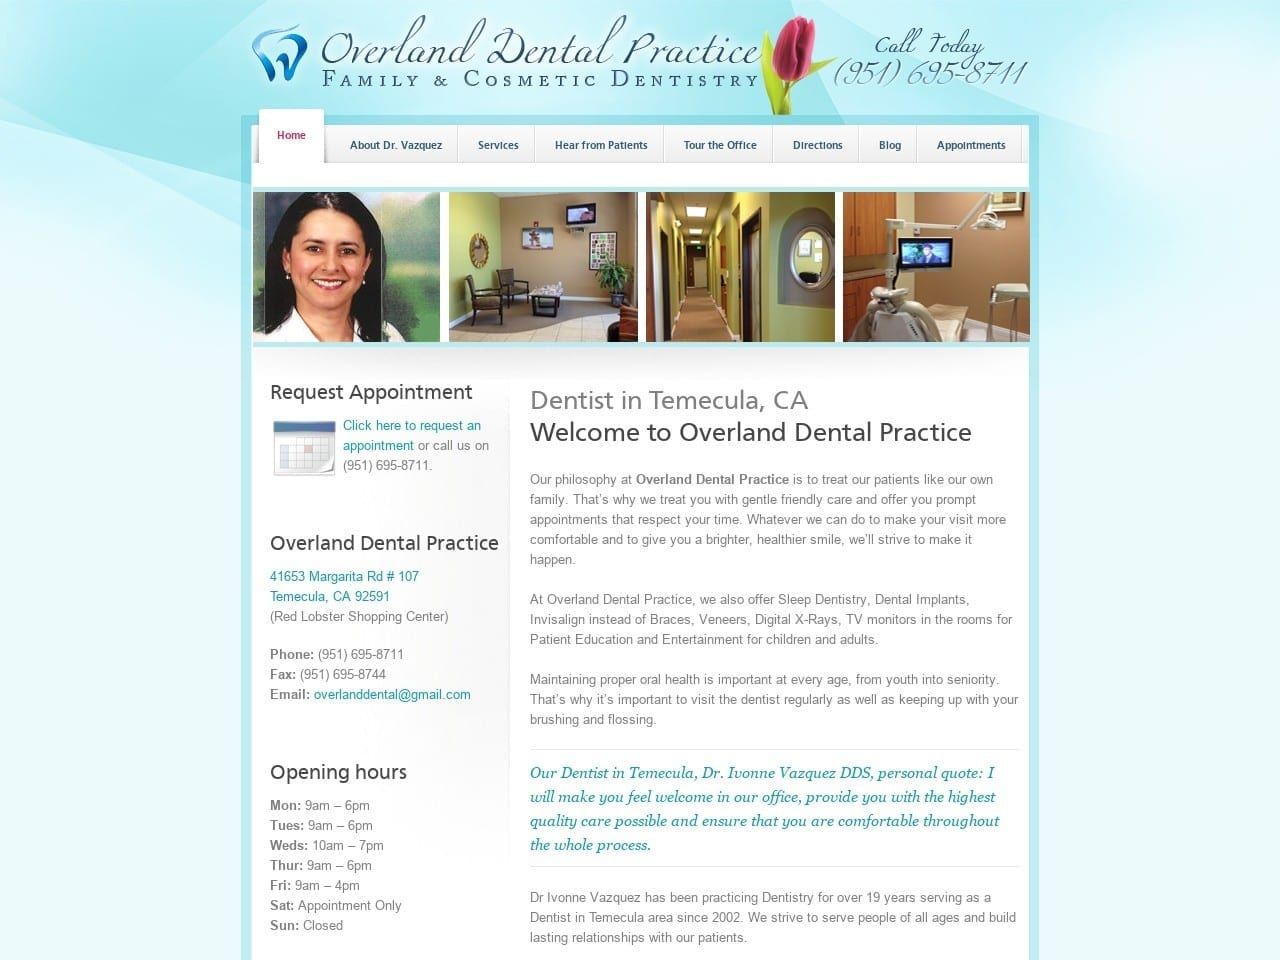 Overland Dental Practice Website Screenshot from overlanddentalpractice.com